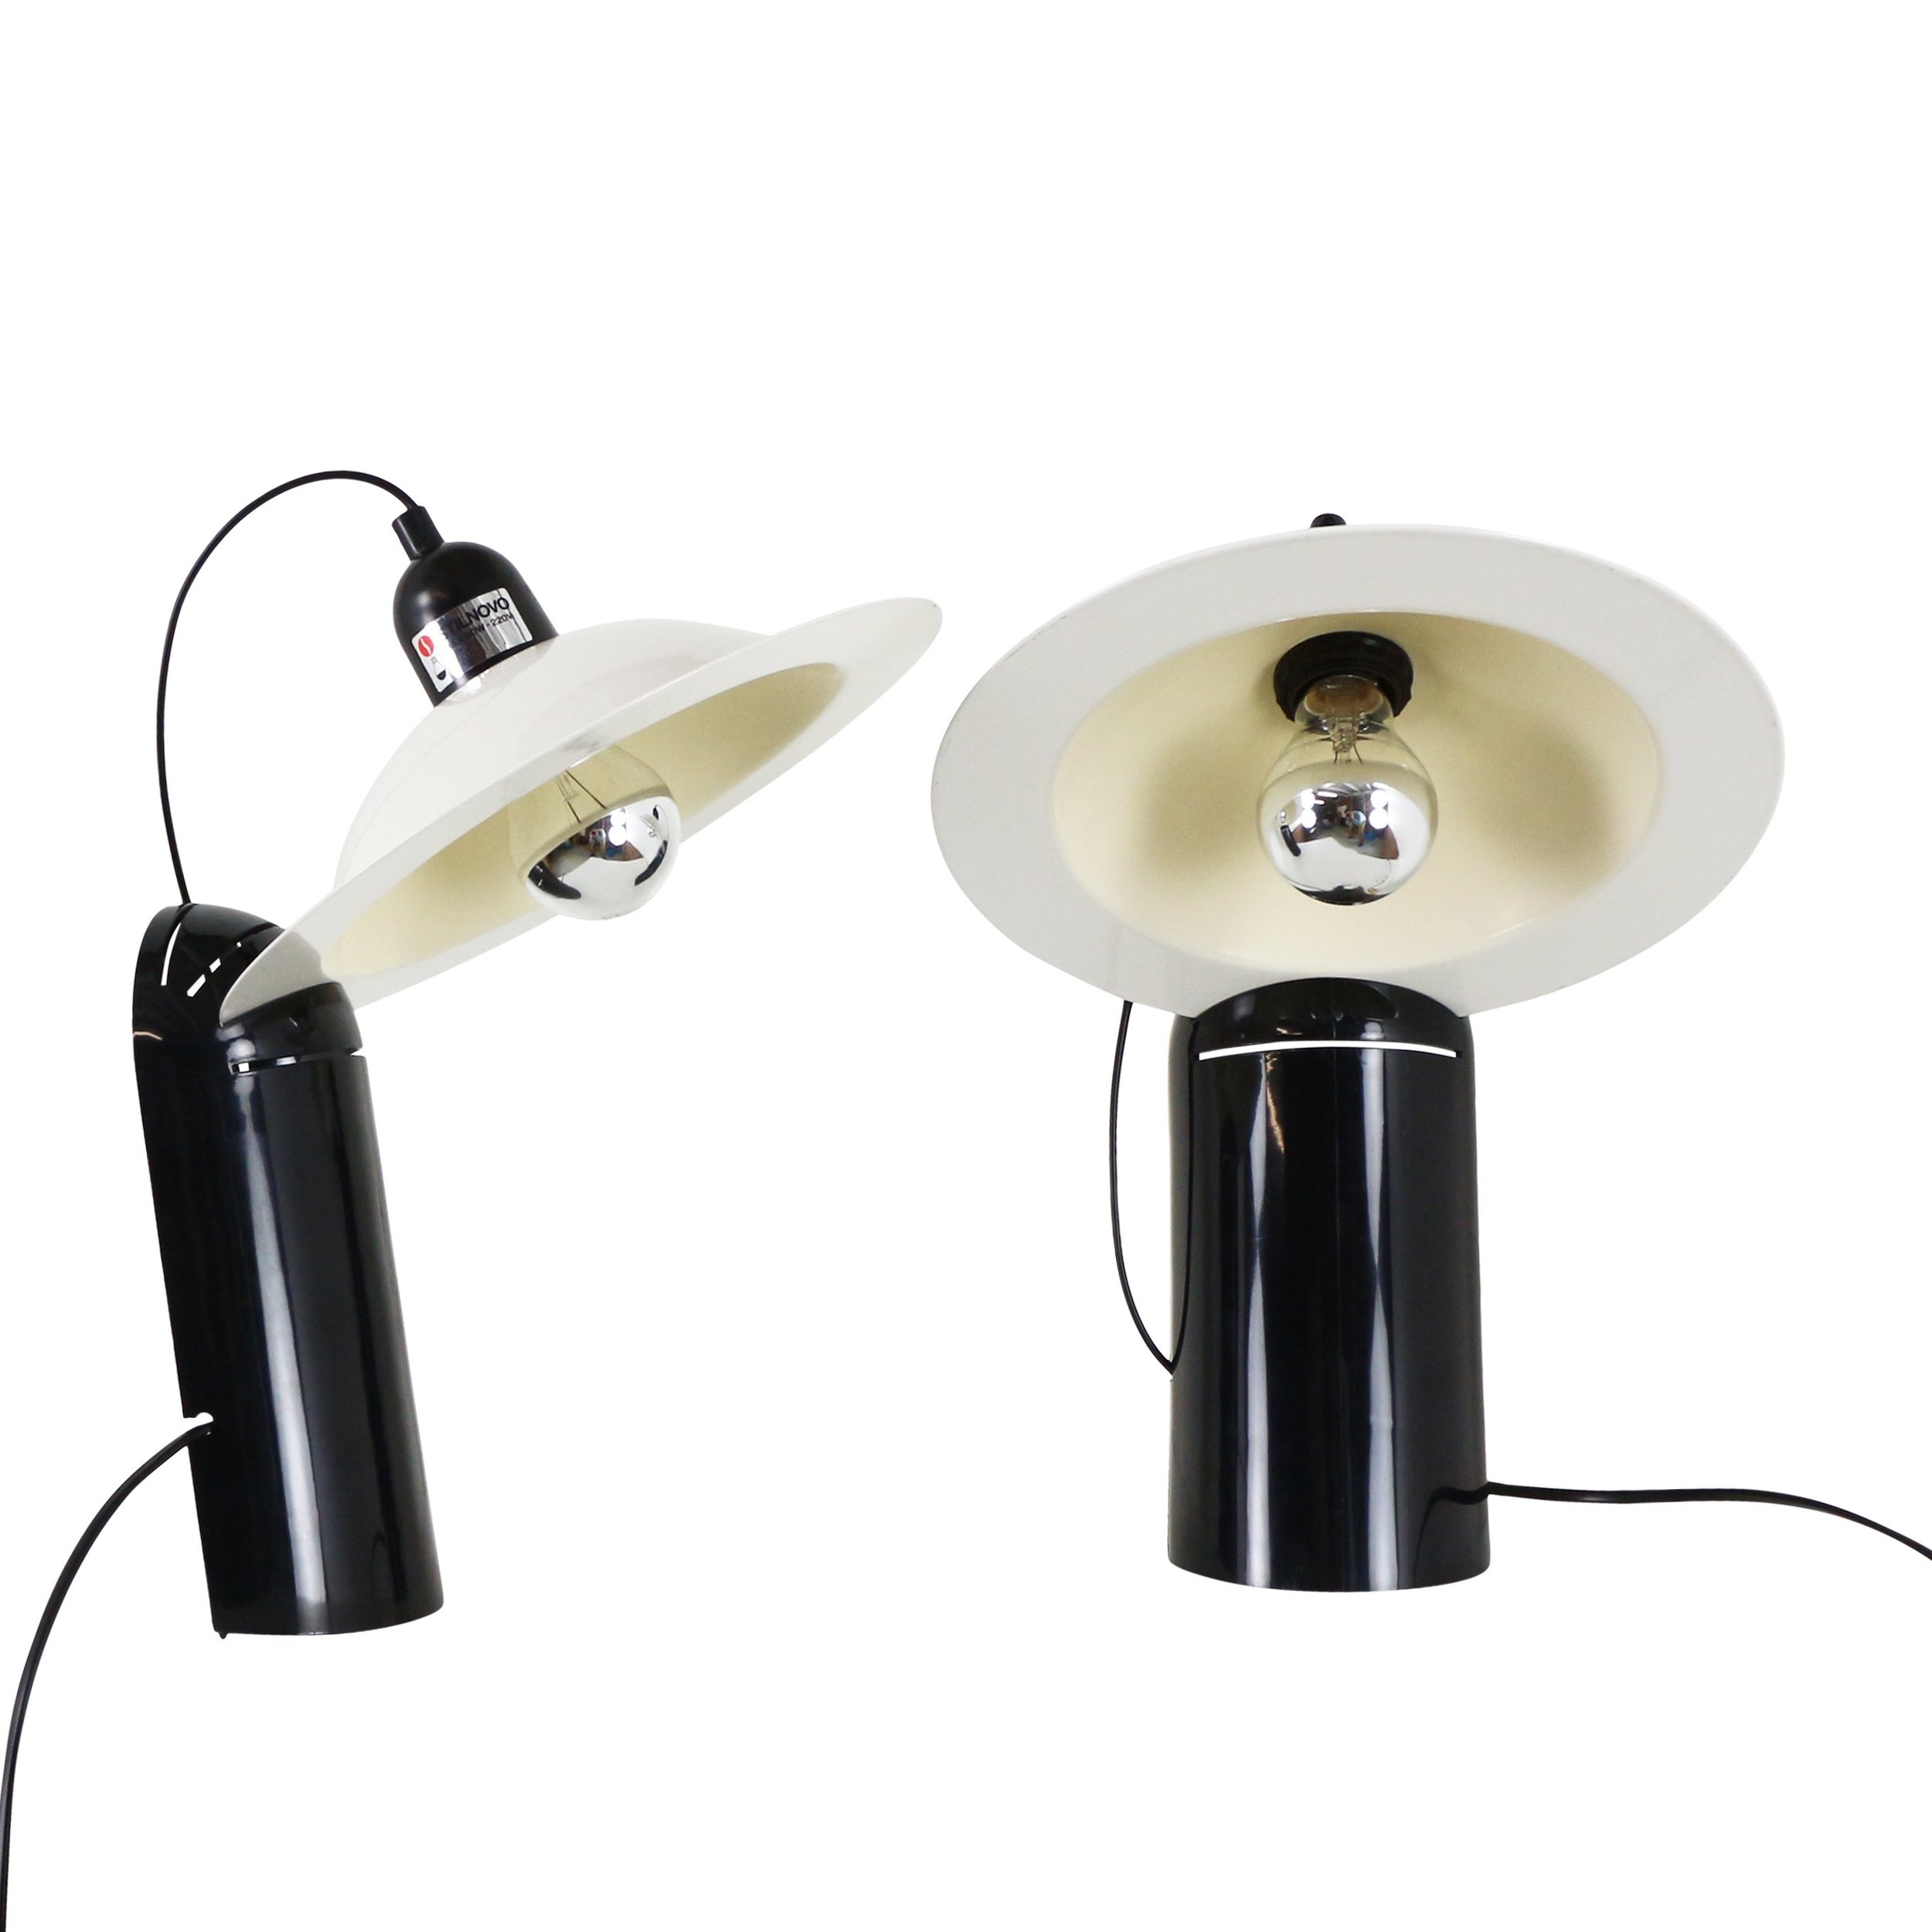 pair-of-lampiatta-lights-by-jonathan-de-pas-donato-durbino-and-paolo-lomazzi-for-stilnovo-1970s.jpeg